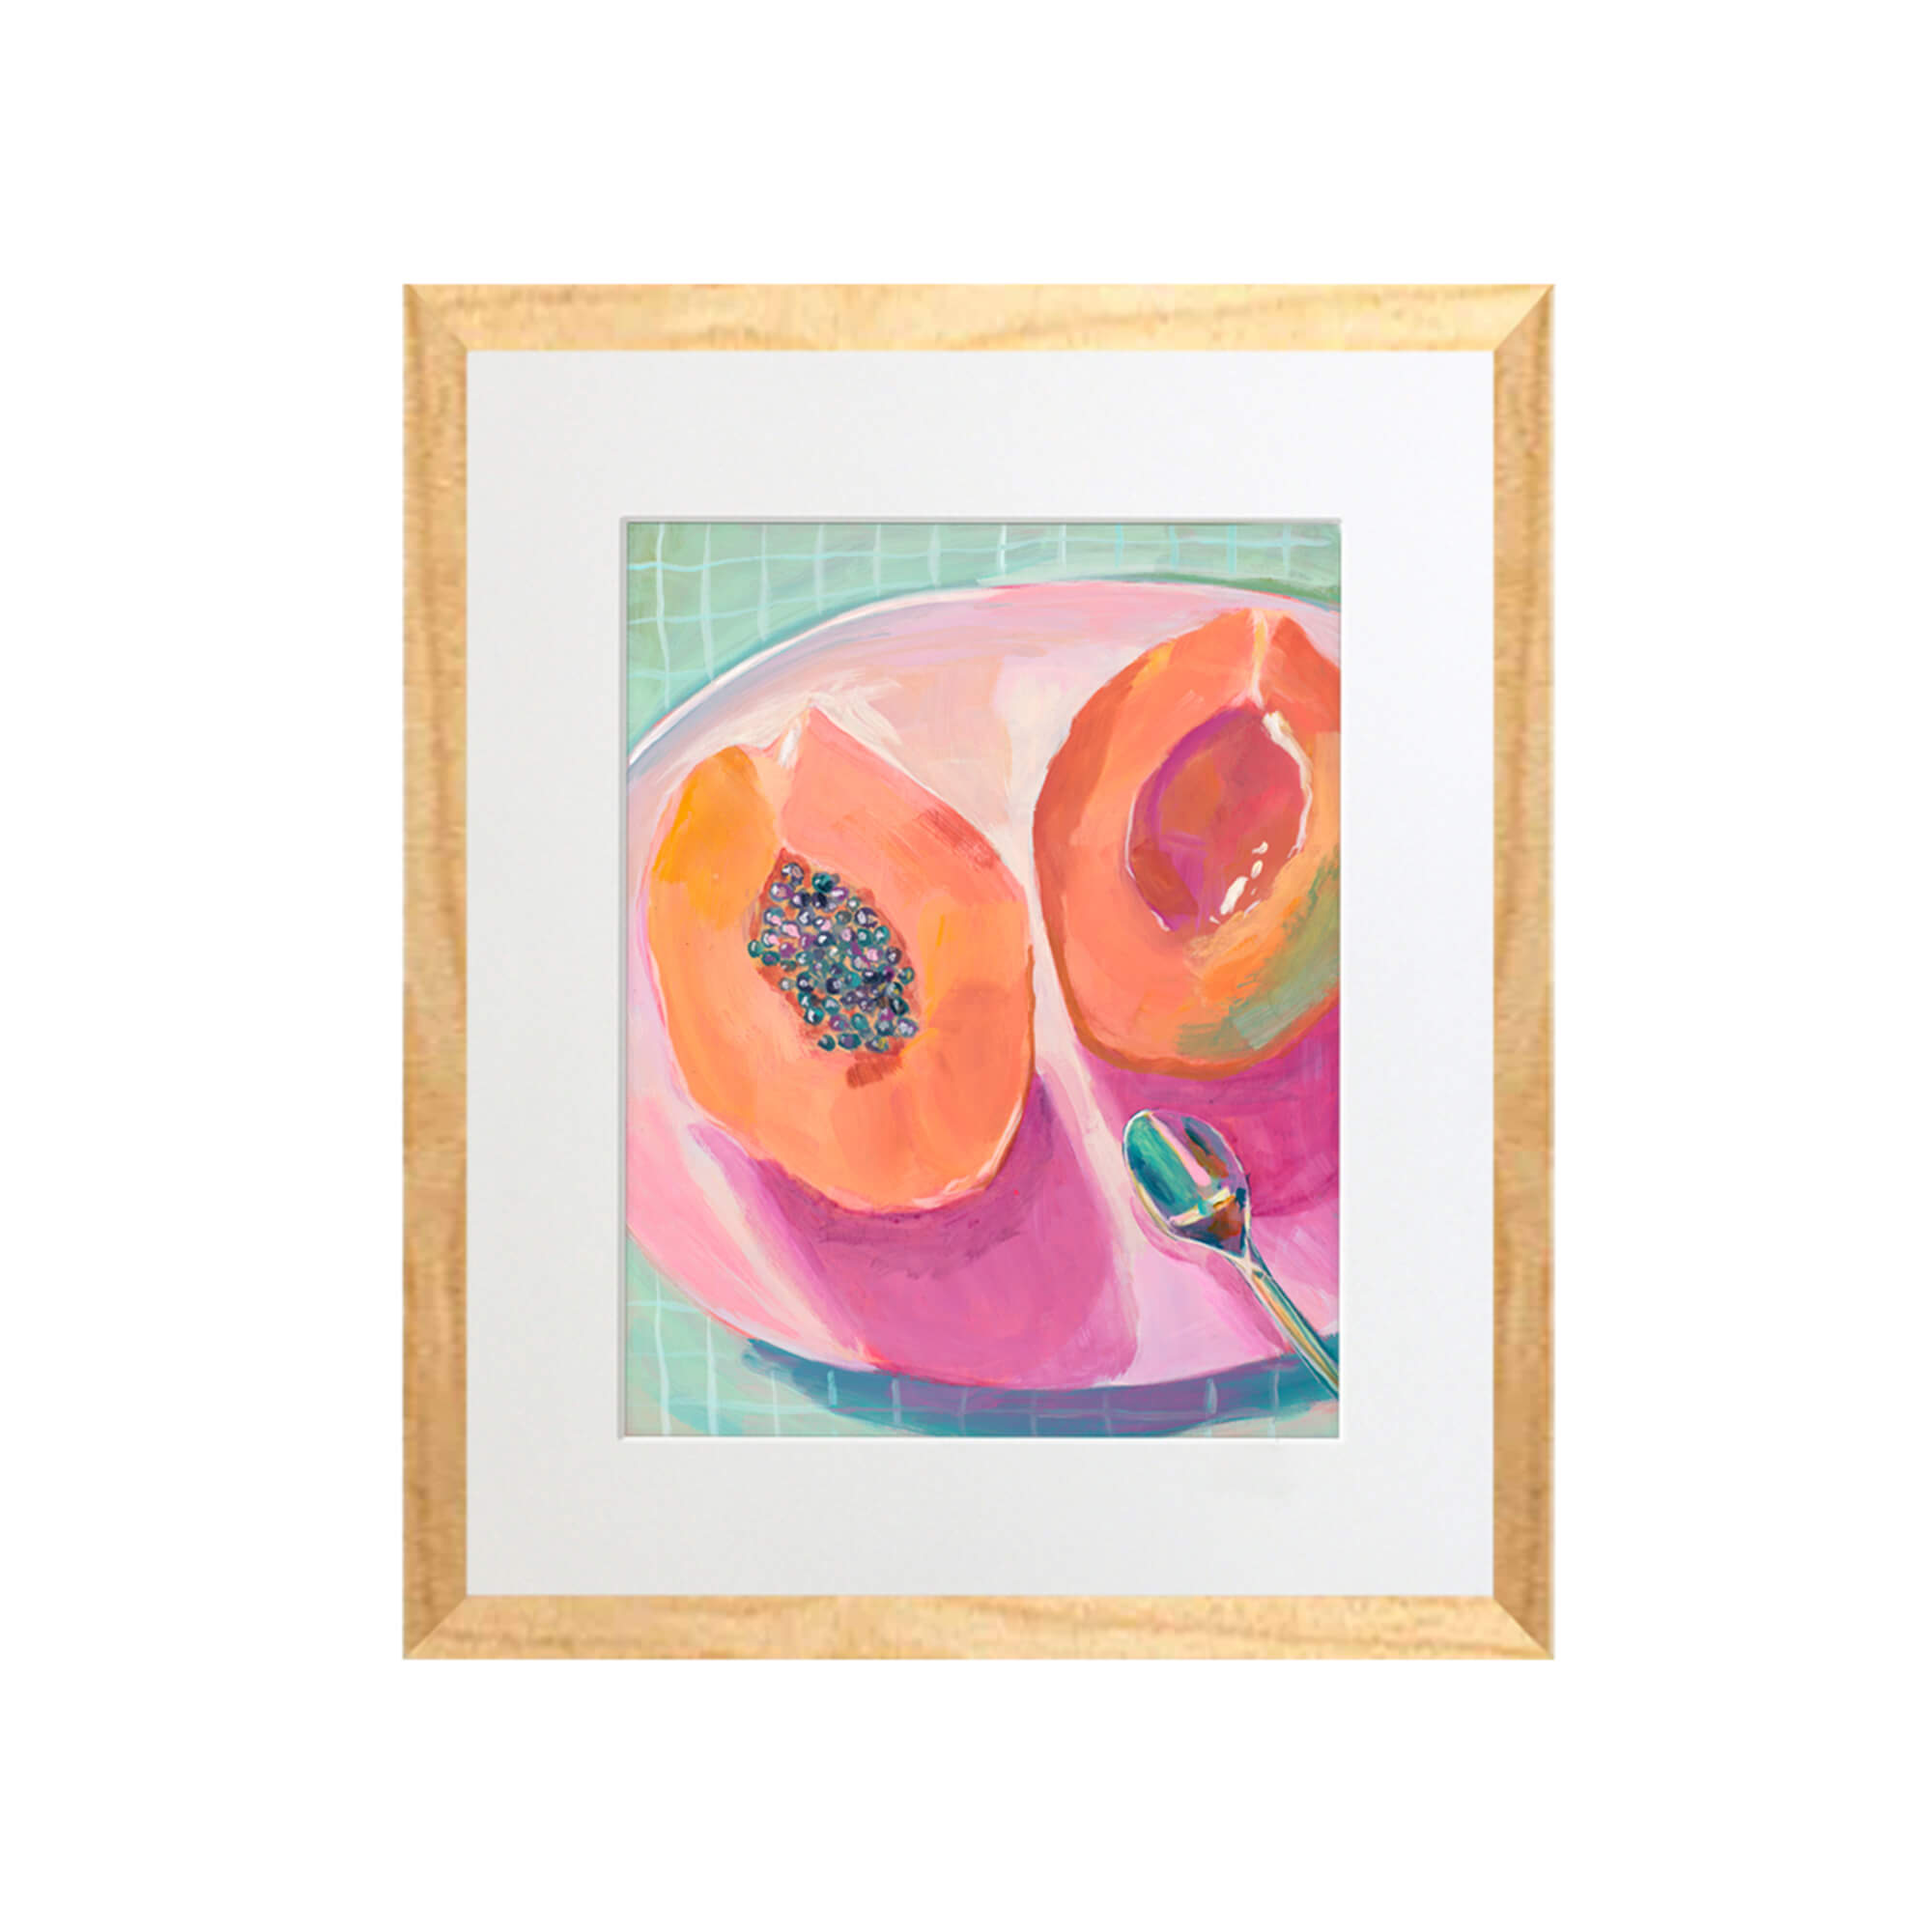 A sliced papaya on a pink plate by Hawaii artist Lindsay Wilkins